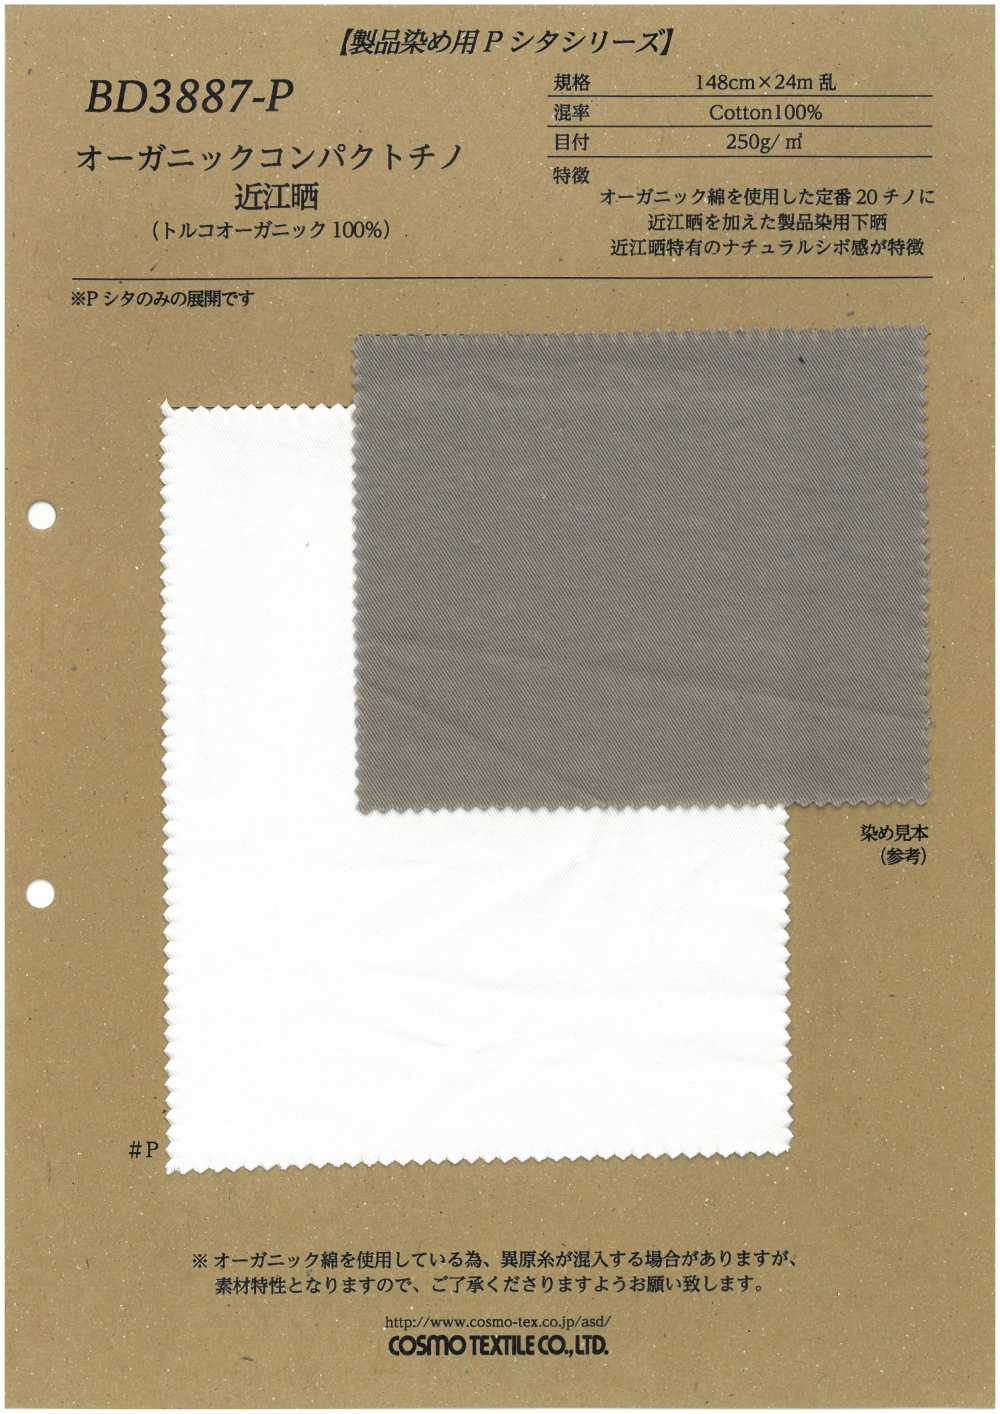 BD3887-P Chino Compacto Orgánico Omi Blanqueado (100% Orgánico Turco)[Fabrica Textil] COSMO TEXTILE